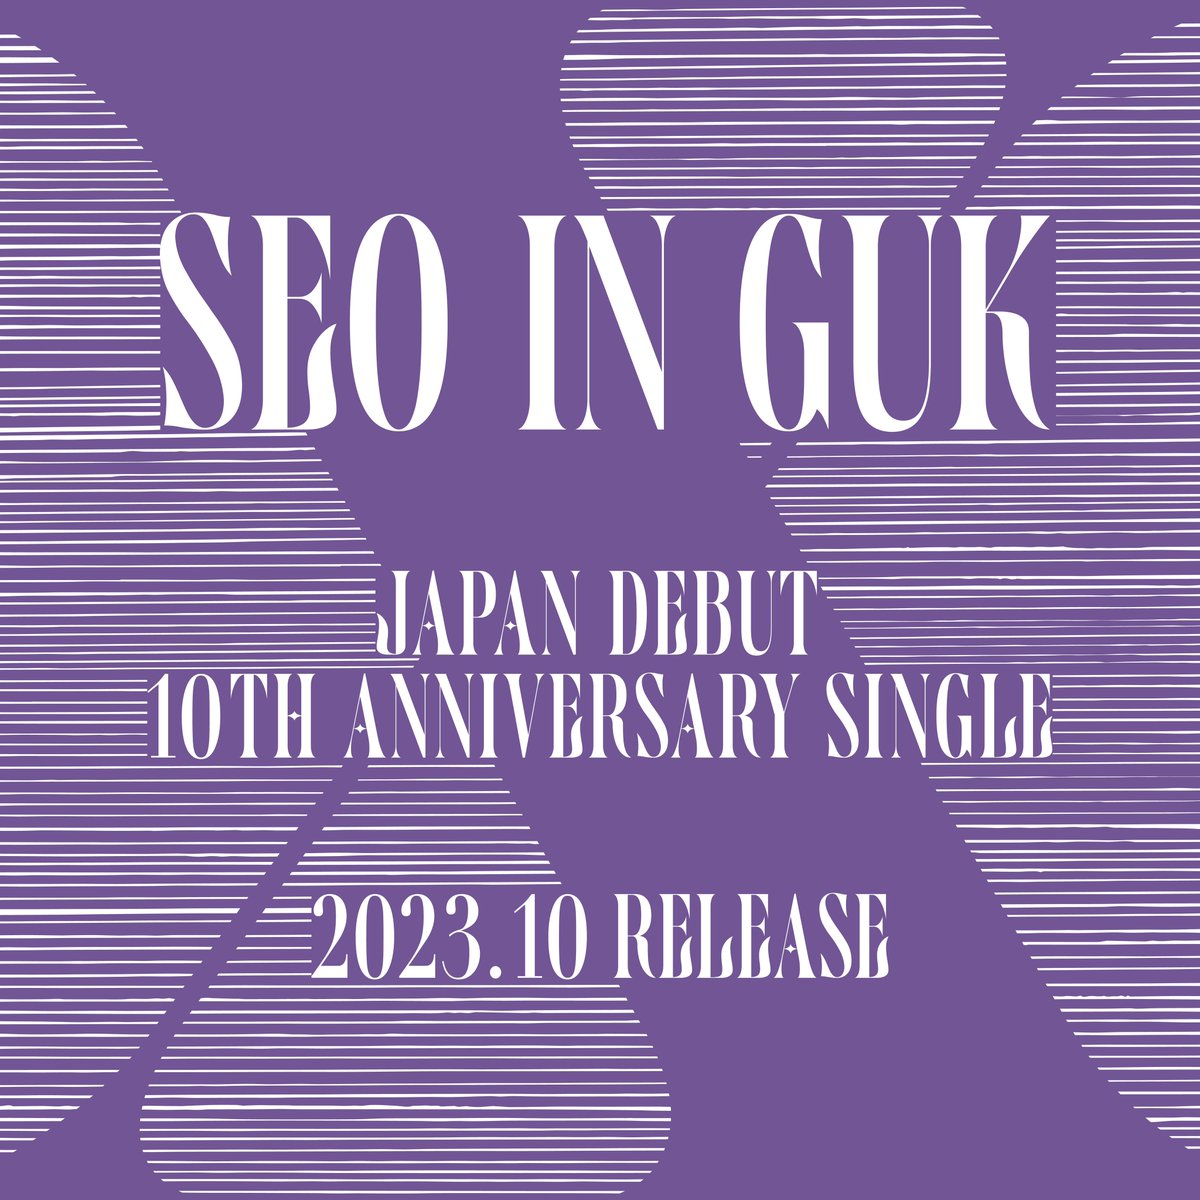 [📸] 𝙎𝙀𝙊 𝙄𝙉 𝙂𝙐𝙆 𝙅𝘼𝙋𝘼𝙉 𝘿𝙀𝘽𝙐𝙏 𝟭𝟬𝙏𝙃 𝘼𝙉𝙉𝙄𝙑𝙀𝙍𝙎𝘼𝙍𝙔 𝙎𝙄𝙉𝙂𝙇𝙀 𝘾𝙊𝙈𝙄𝙉𝙂 𝙎𝙊𝙊𝙉 🎤 2023.10 RELEASE 💜 #서인국 #SeoInGuk #ソイングク #Single #ComingSoon @seoingukfc_jp